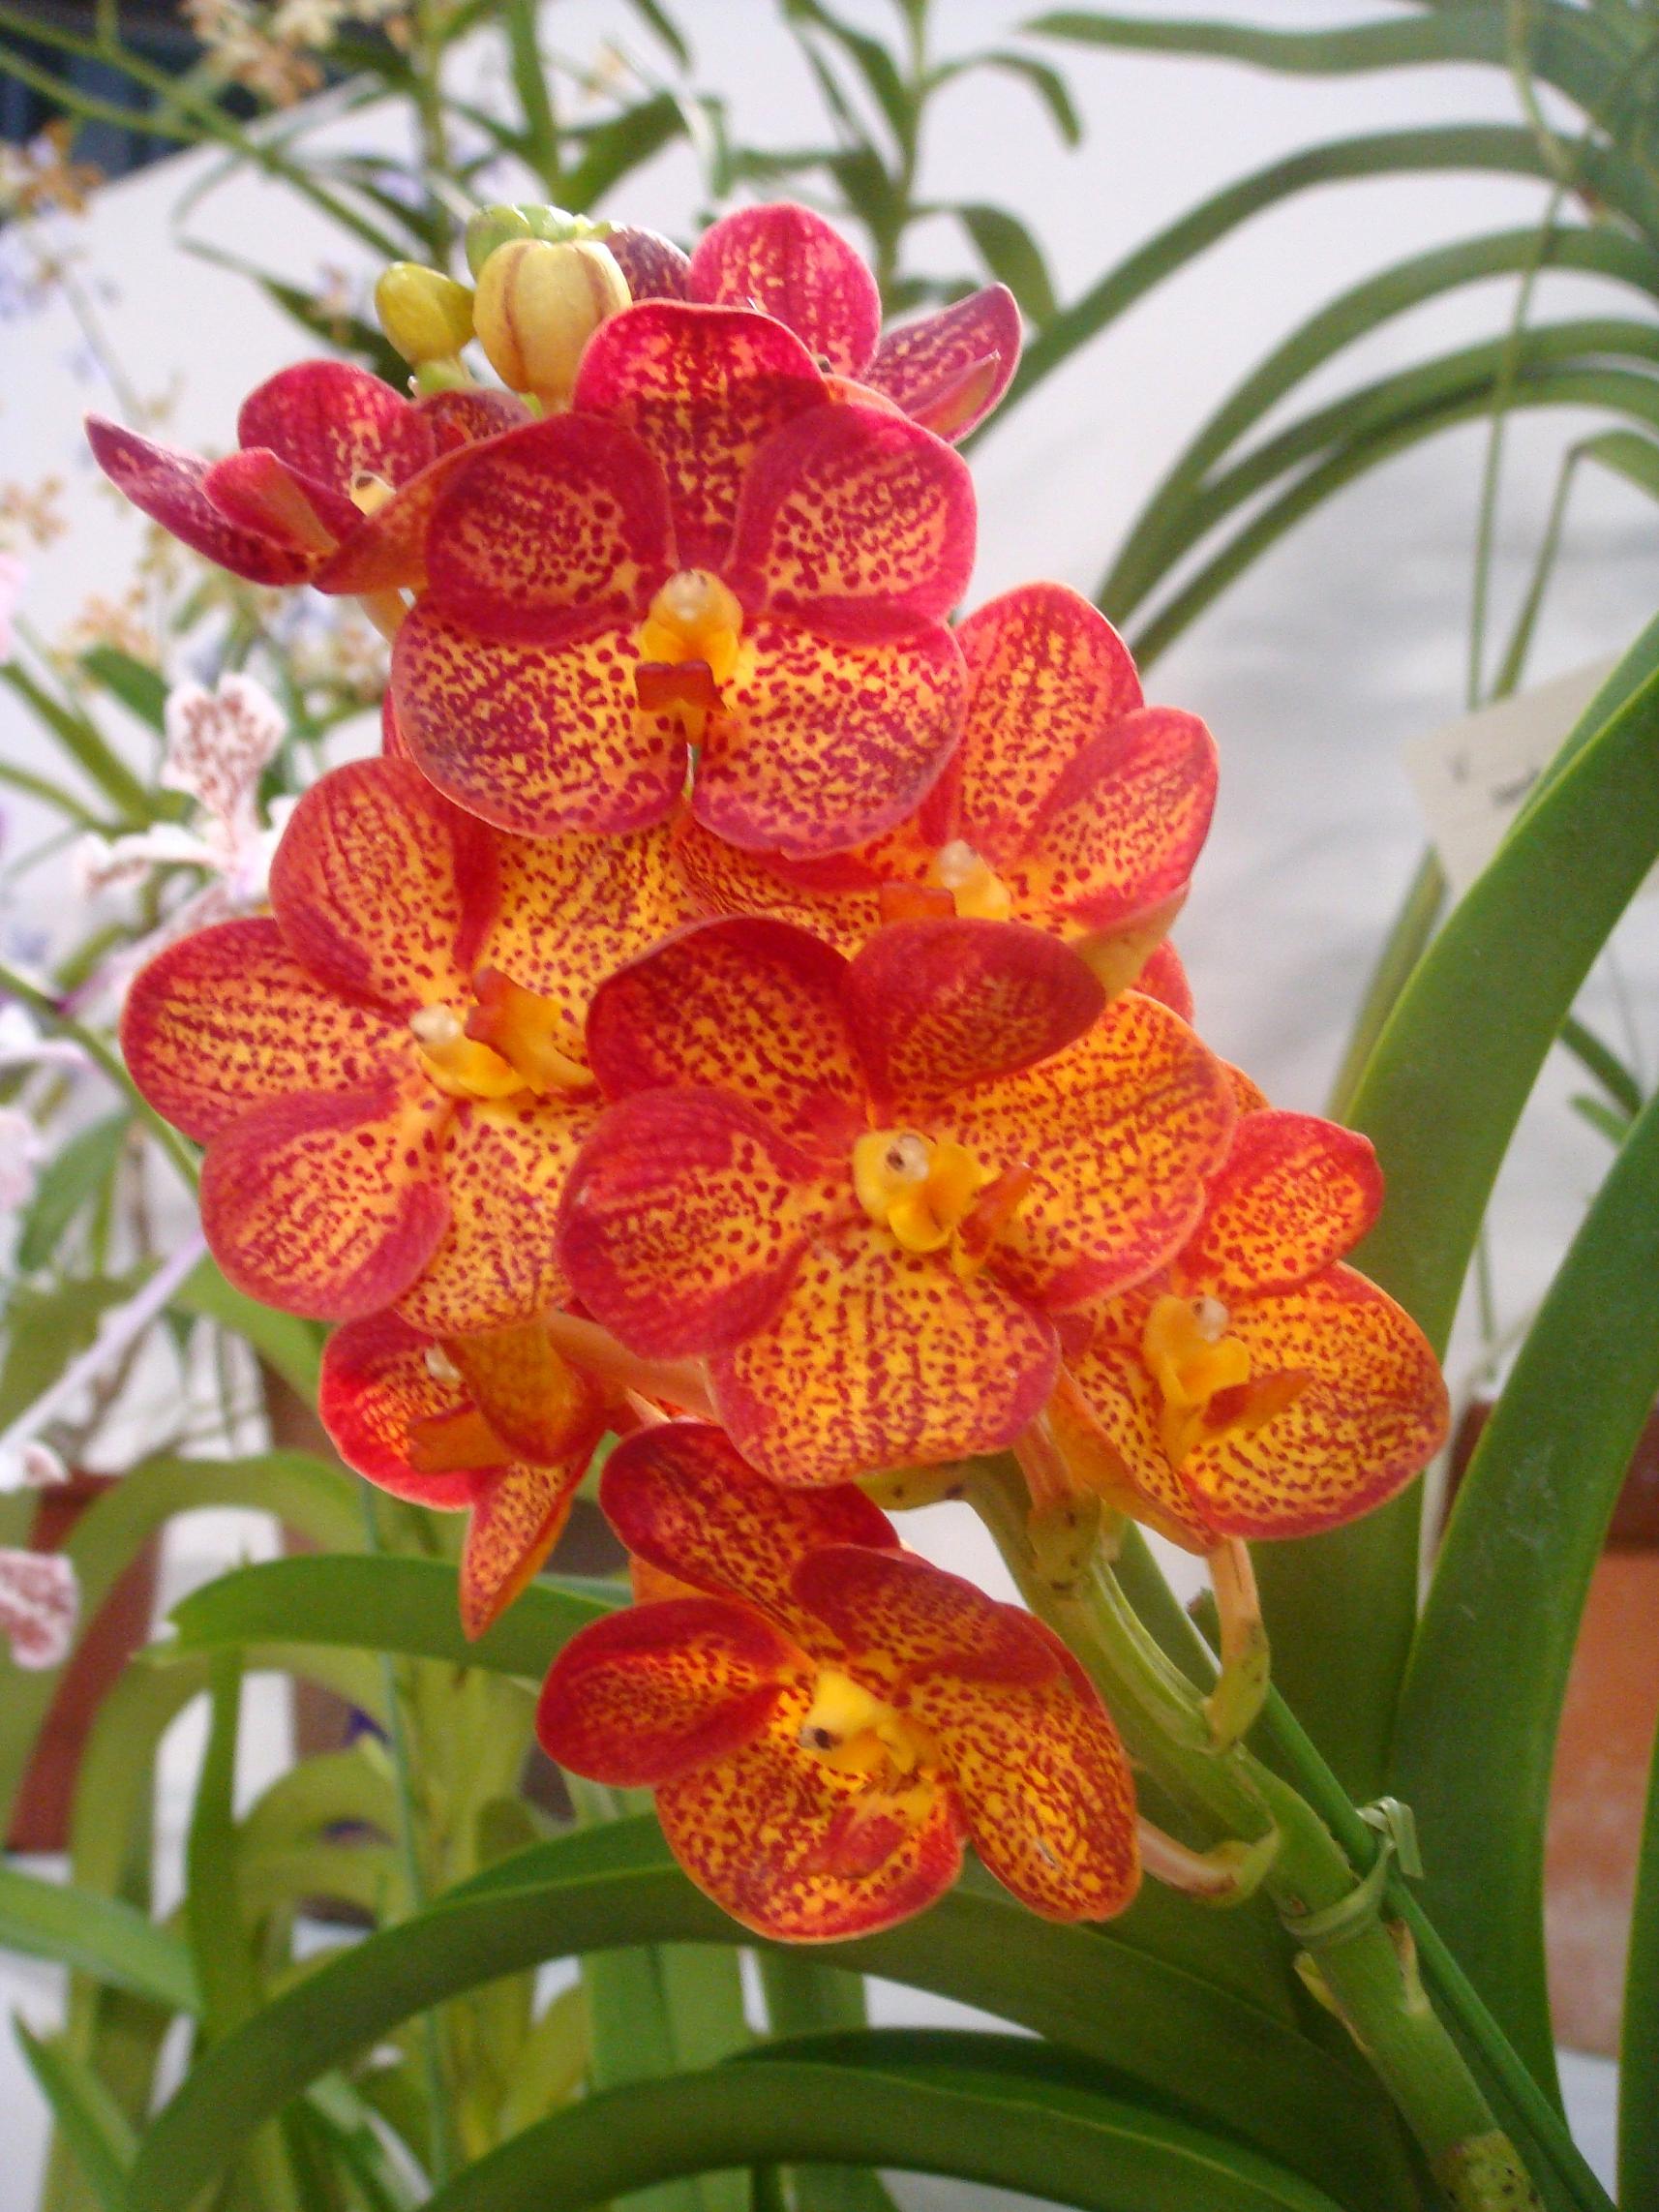 Hoa Phong Lan Vi T Vietnam Orchids Ascocenda